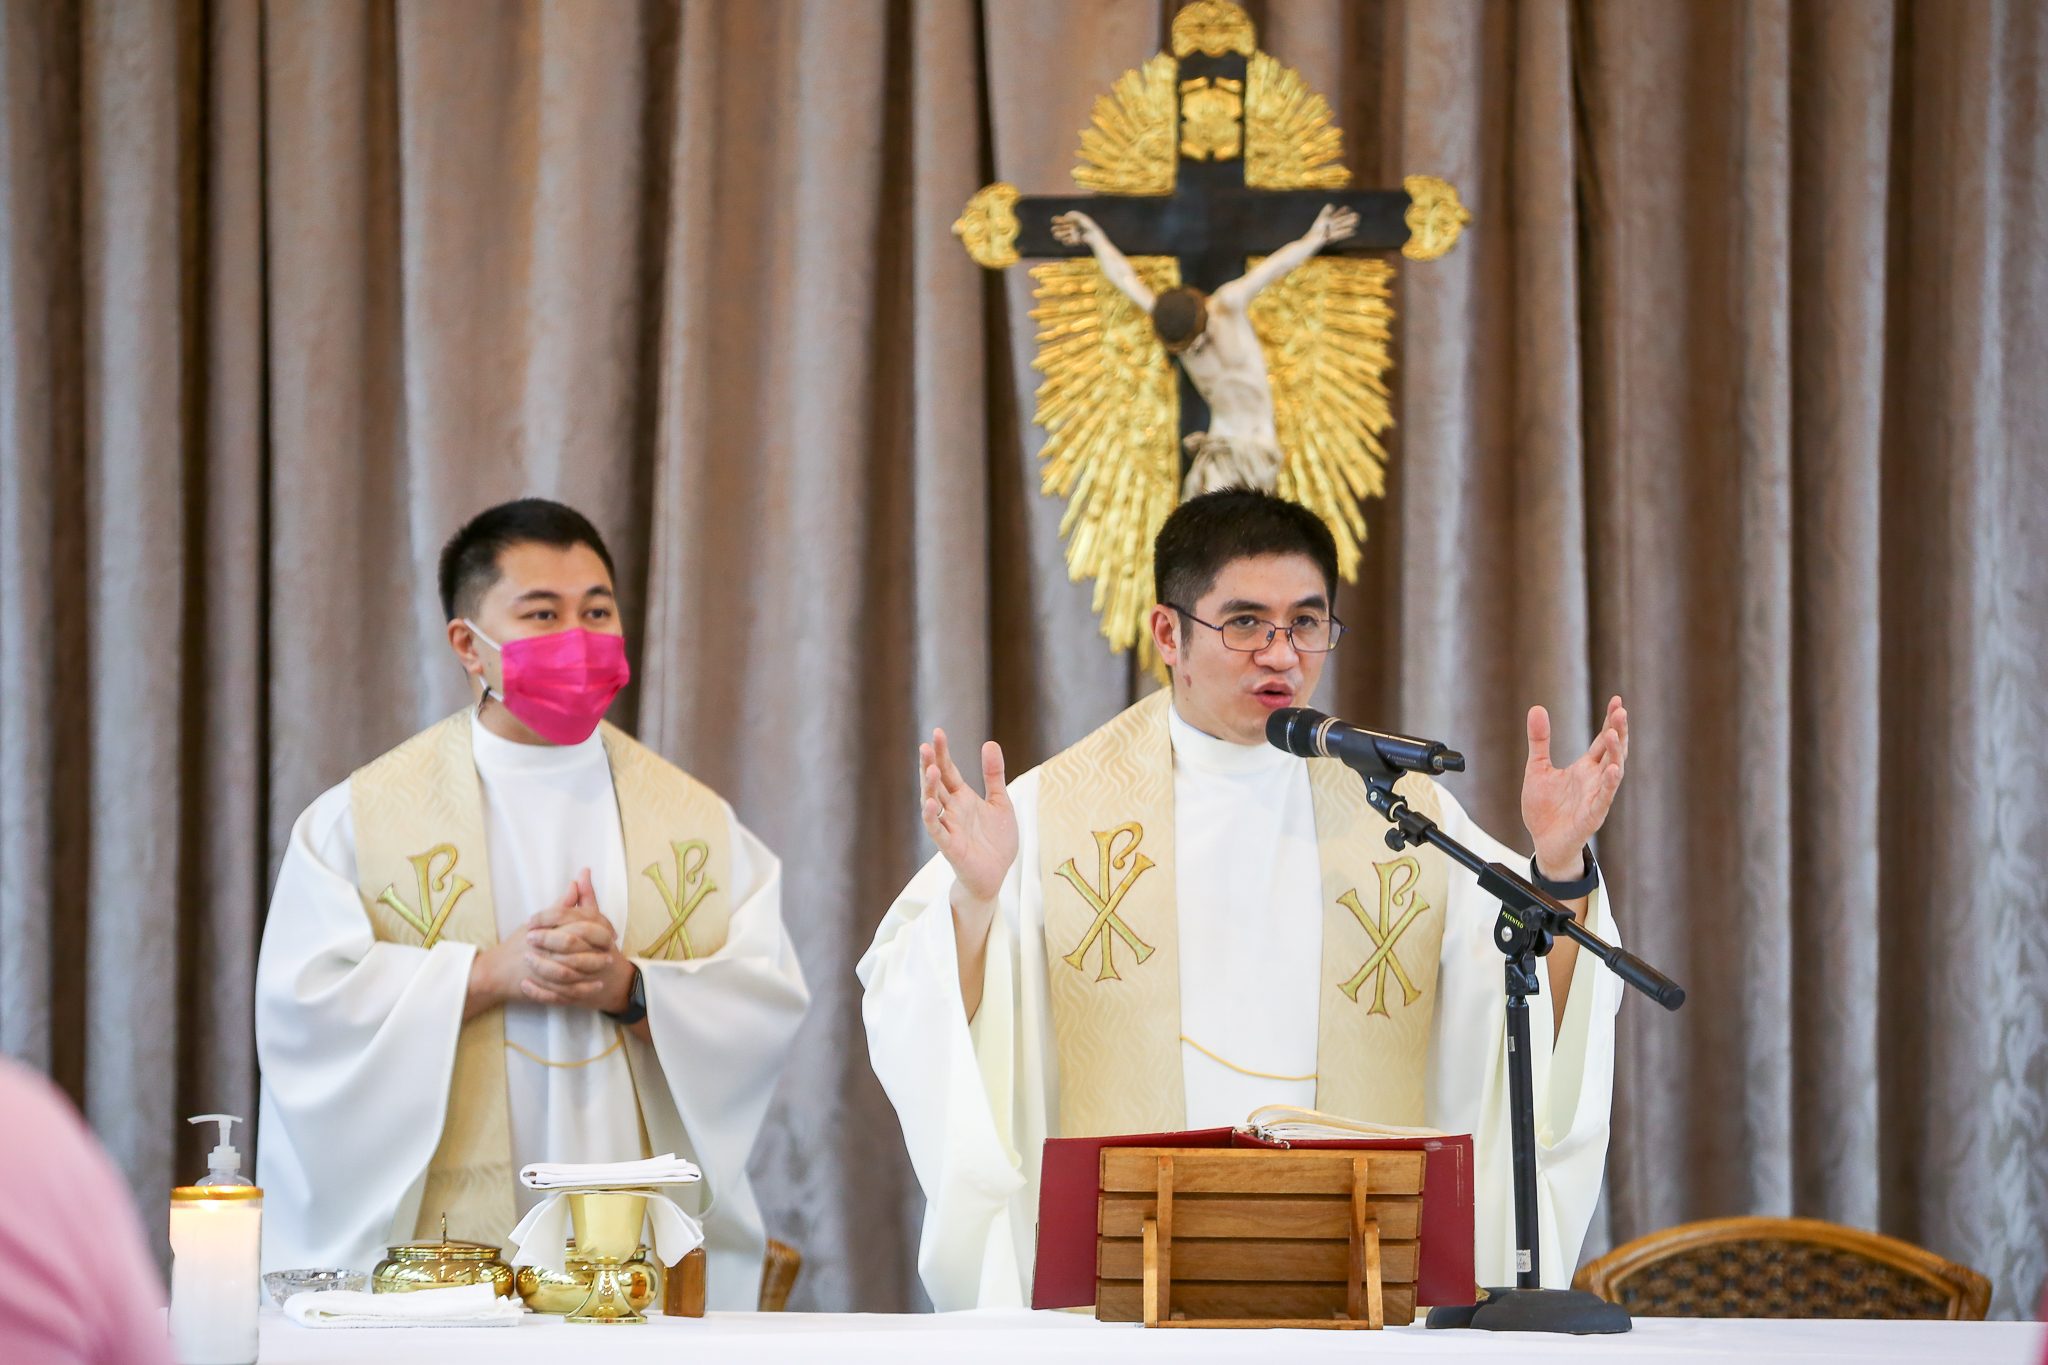 Fr. Regie Malicdem, longtime aide to Manila archbishops, named vicar general